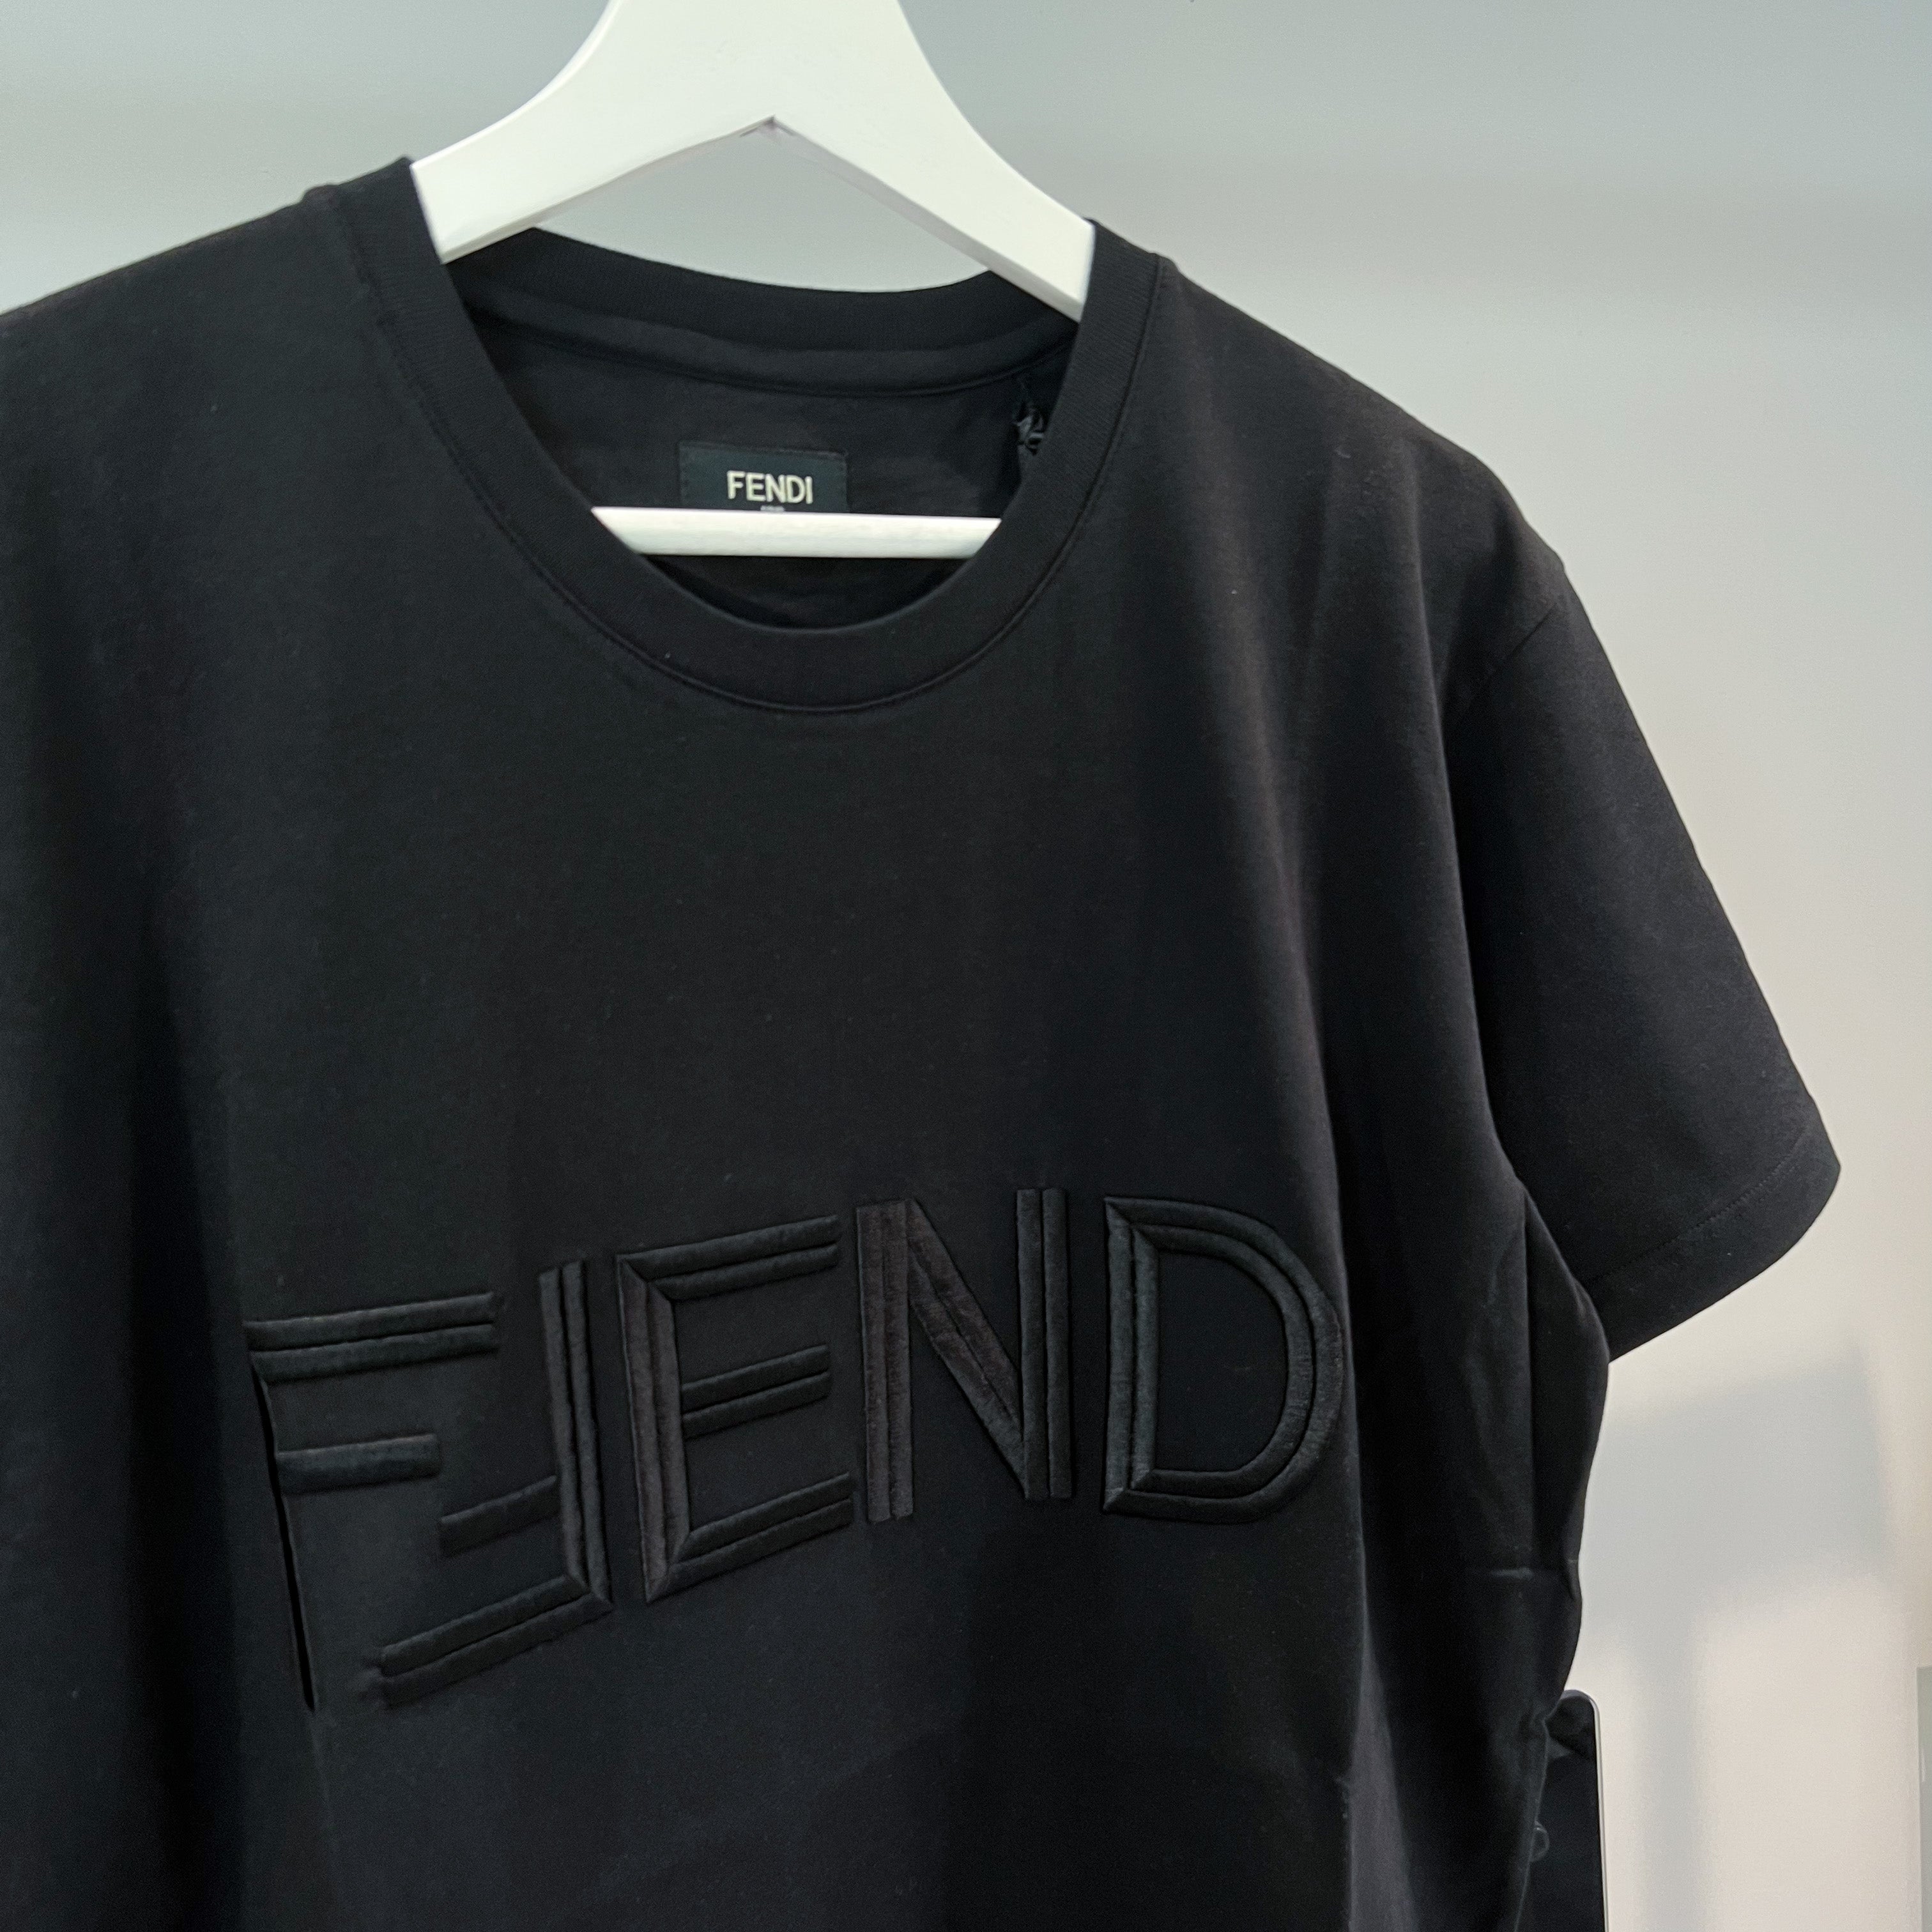 Fendi Embroidered Logo Tee